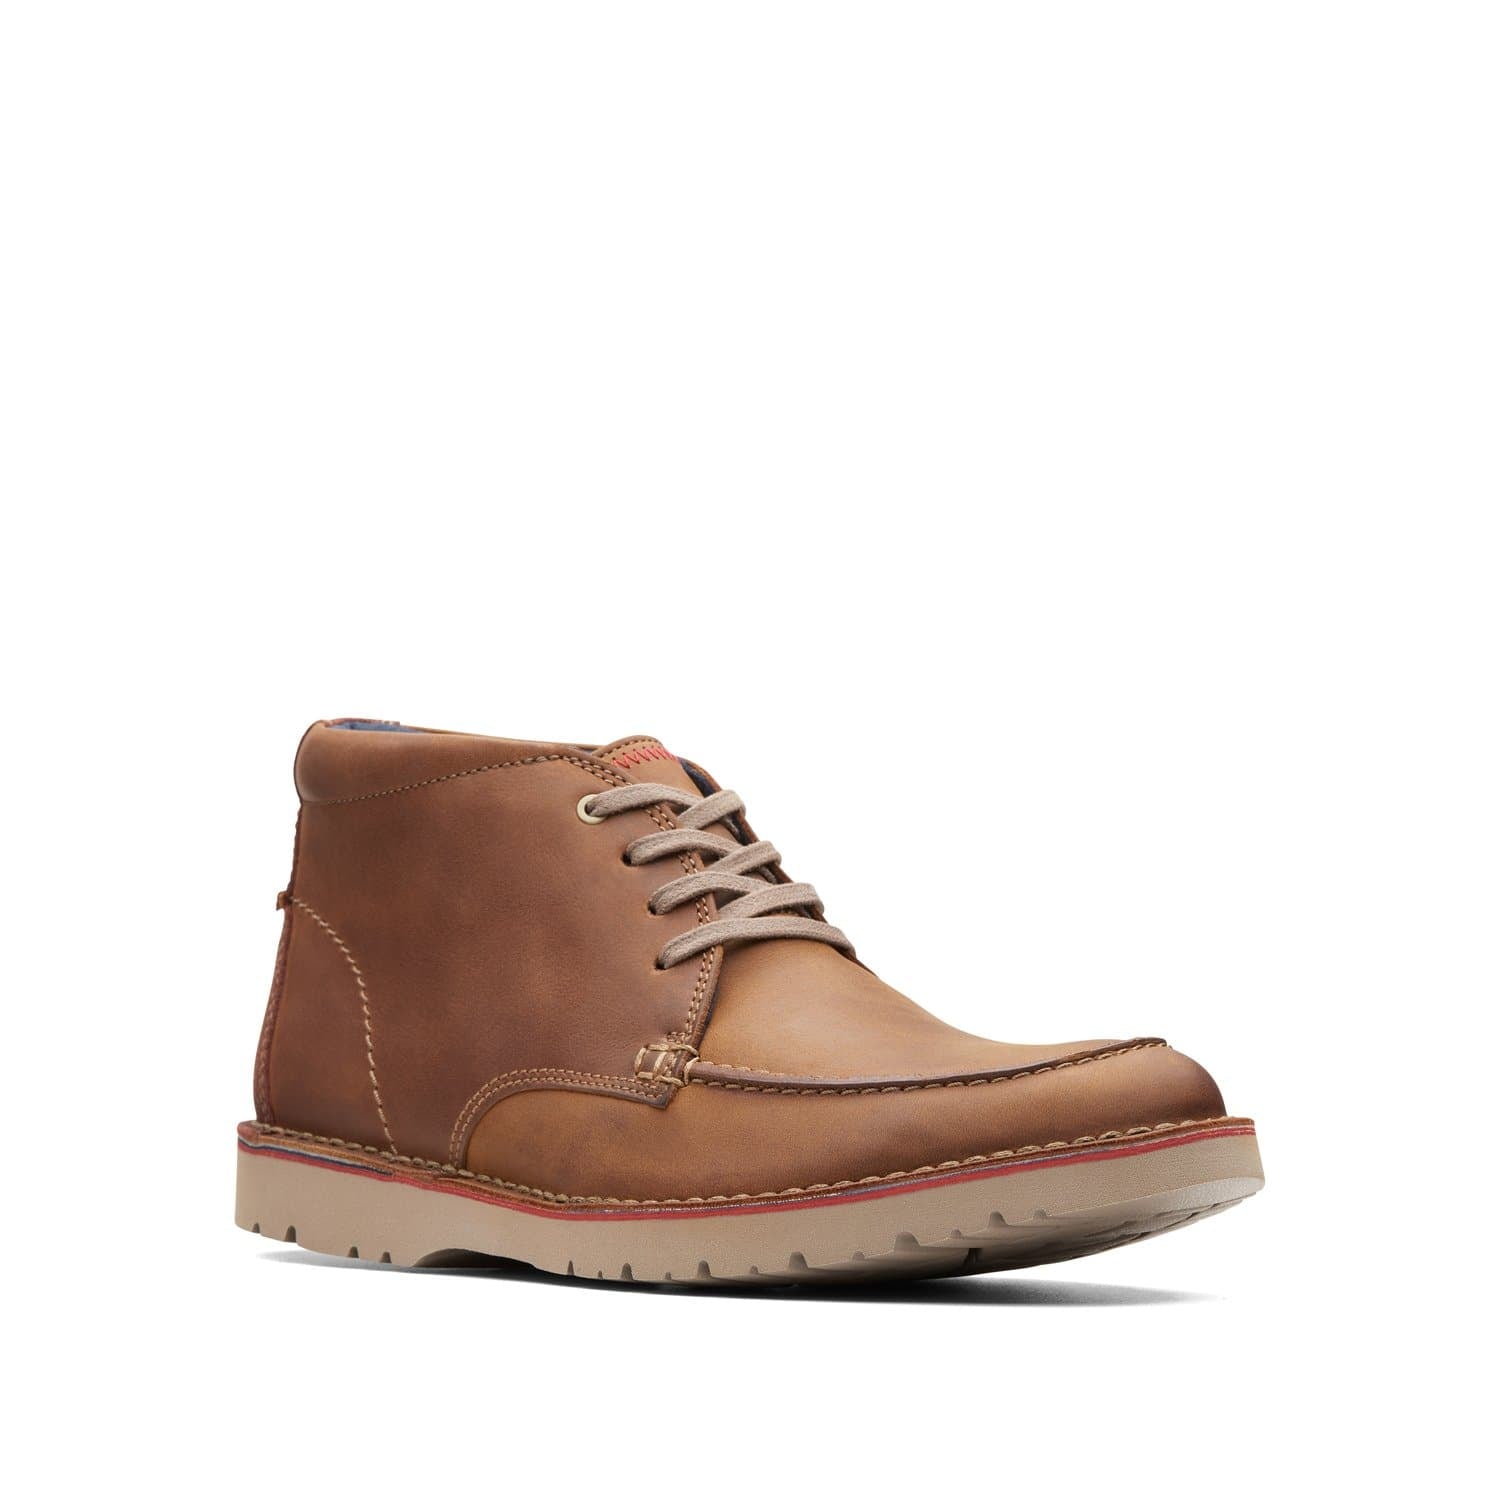 Clarks-Vargo-Rise-Men's-Boots-Dark-Tan-Leather-26136680